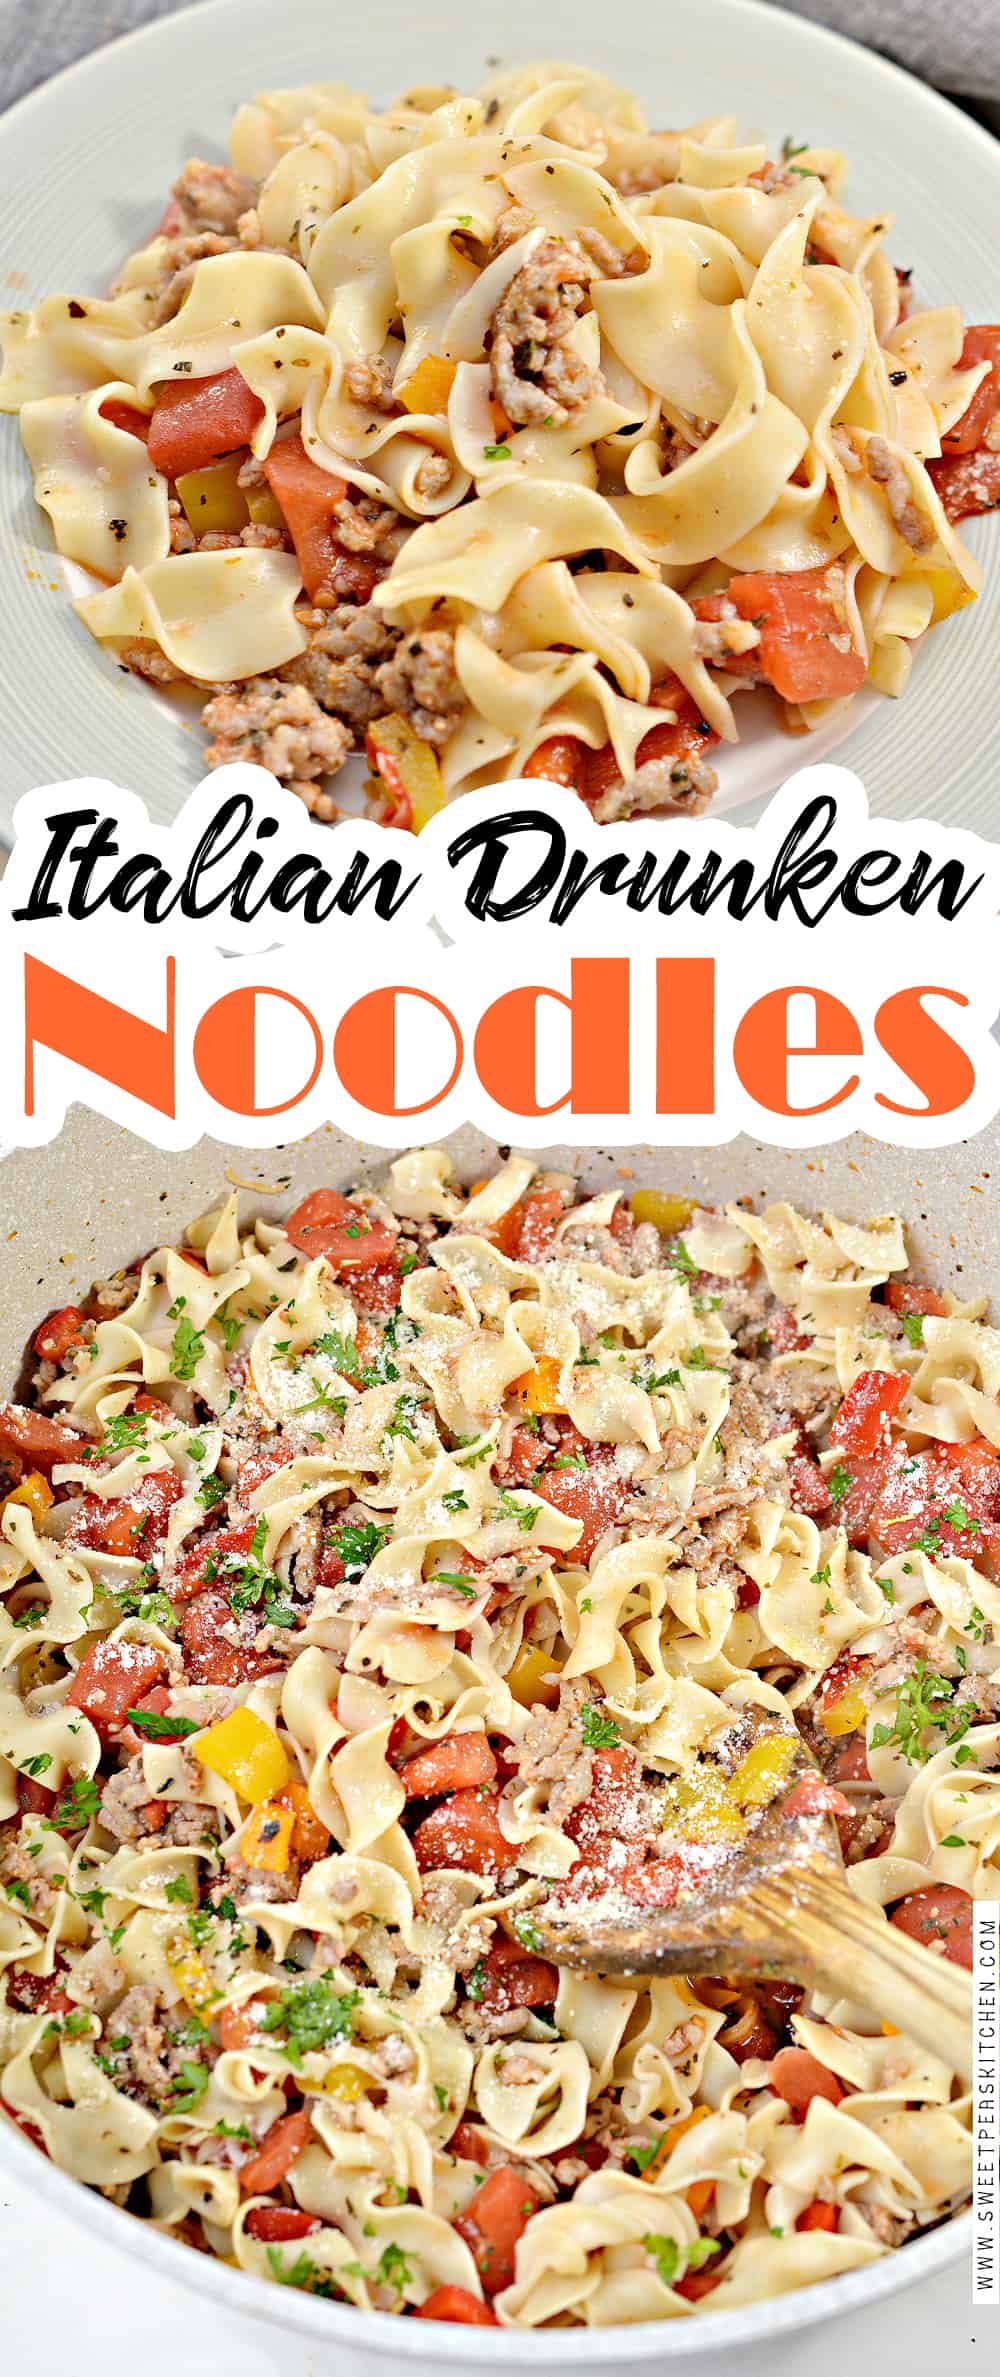 Italian Drunken Noodles on Pinterest